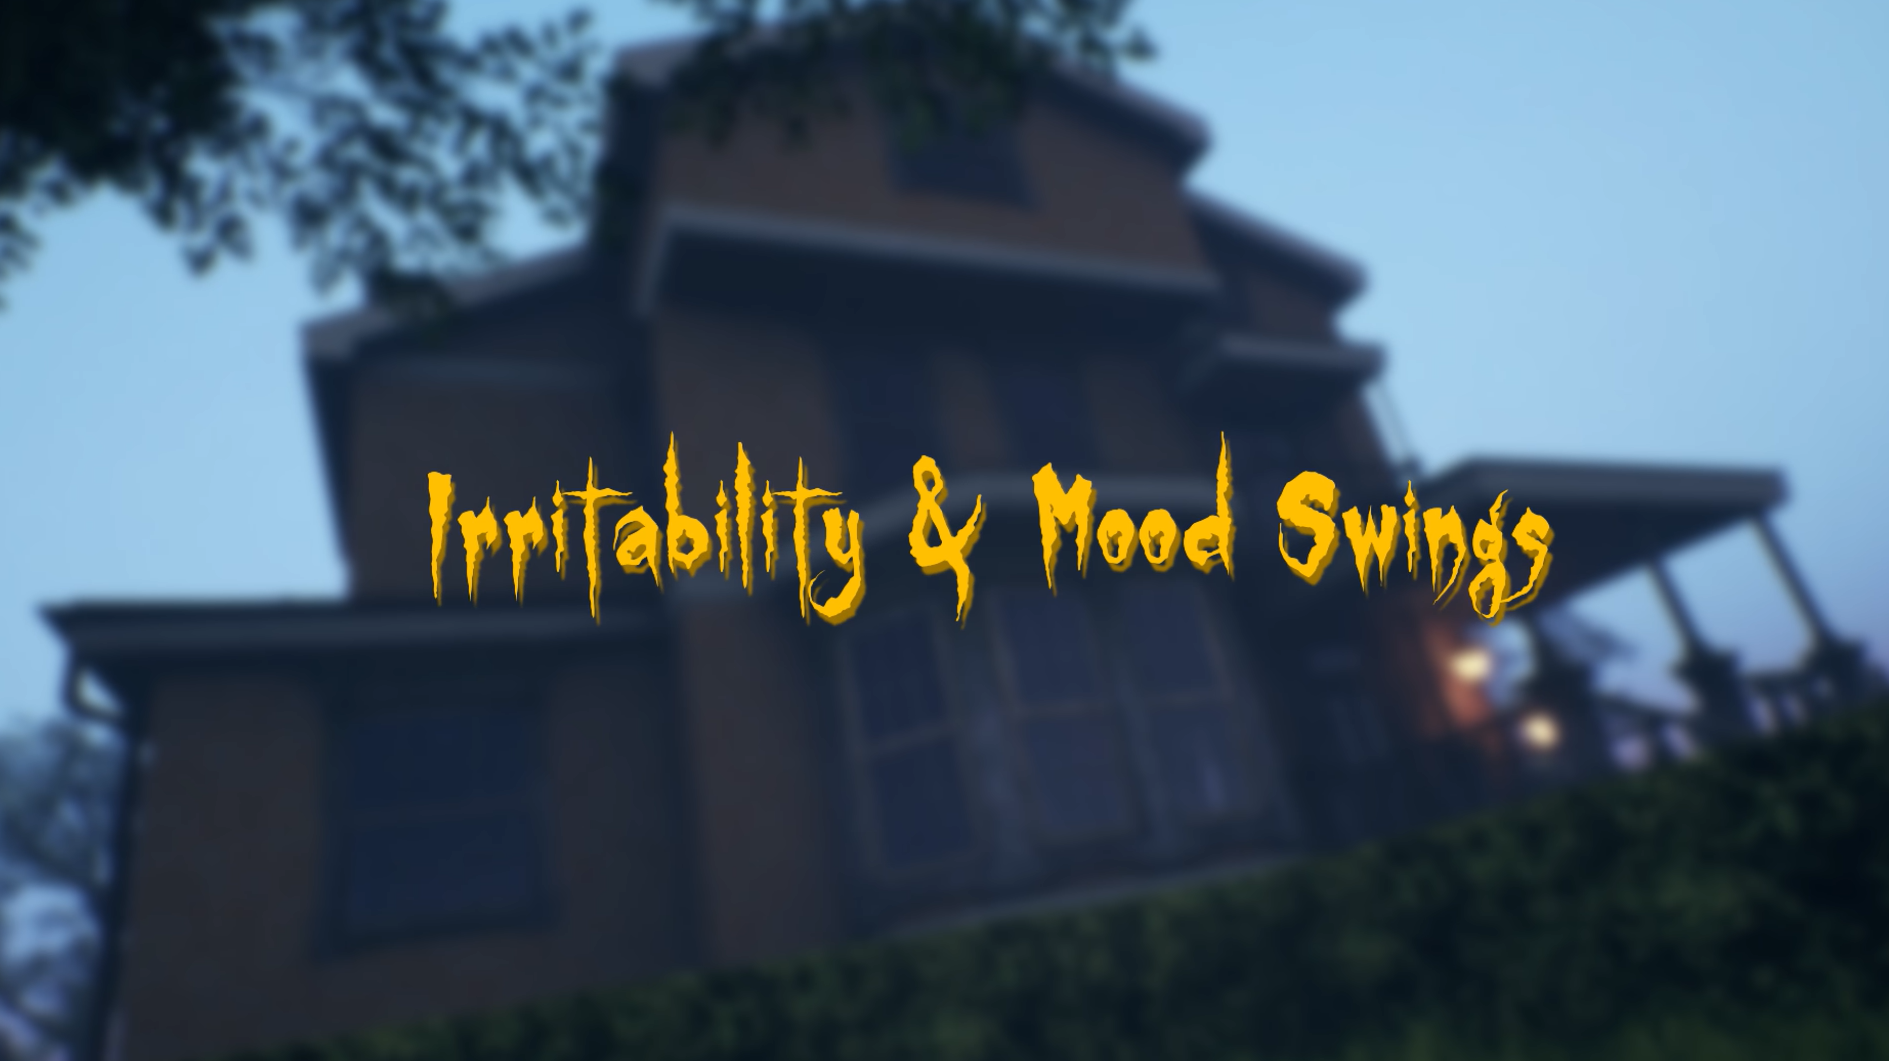 Irritability and Mood Swings Free Download